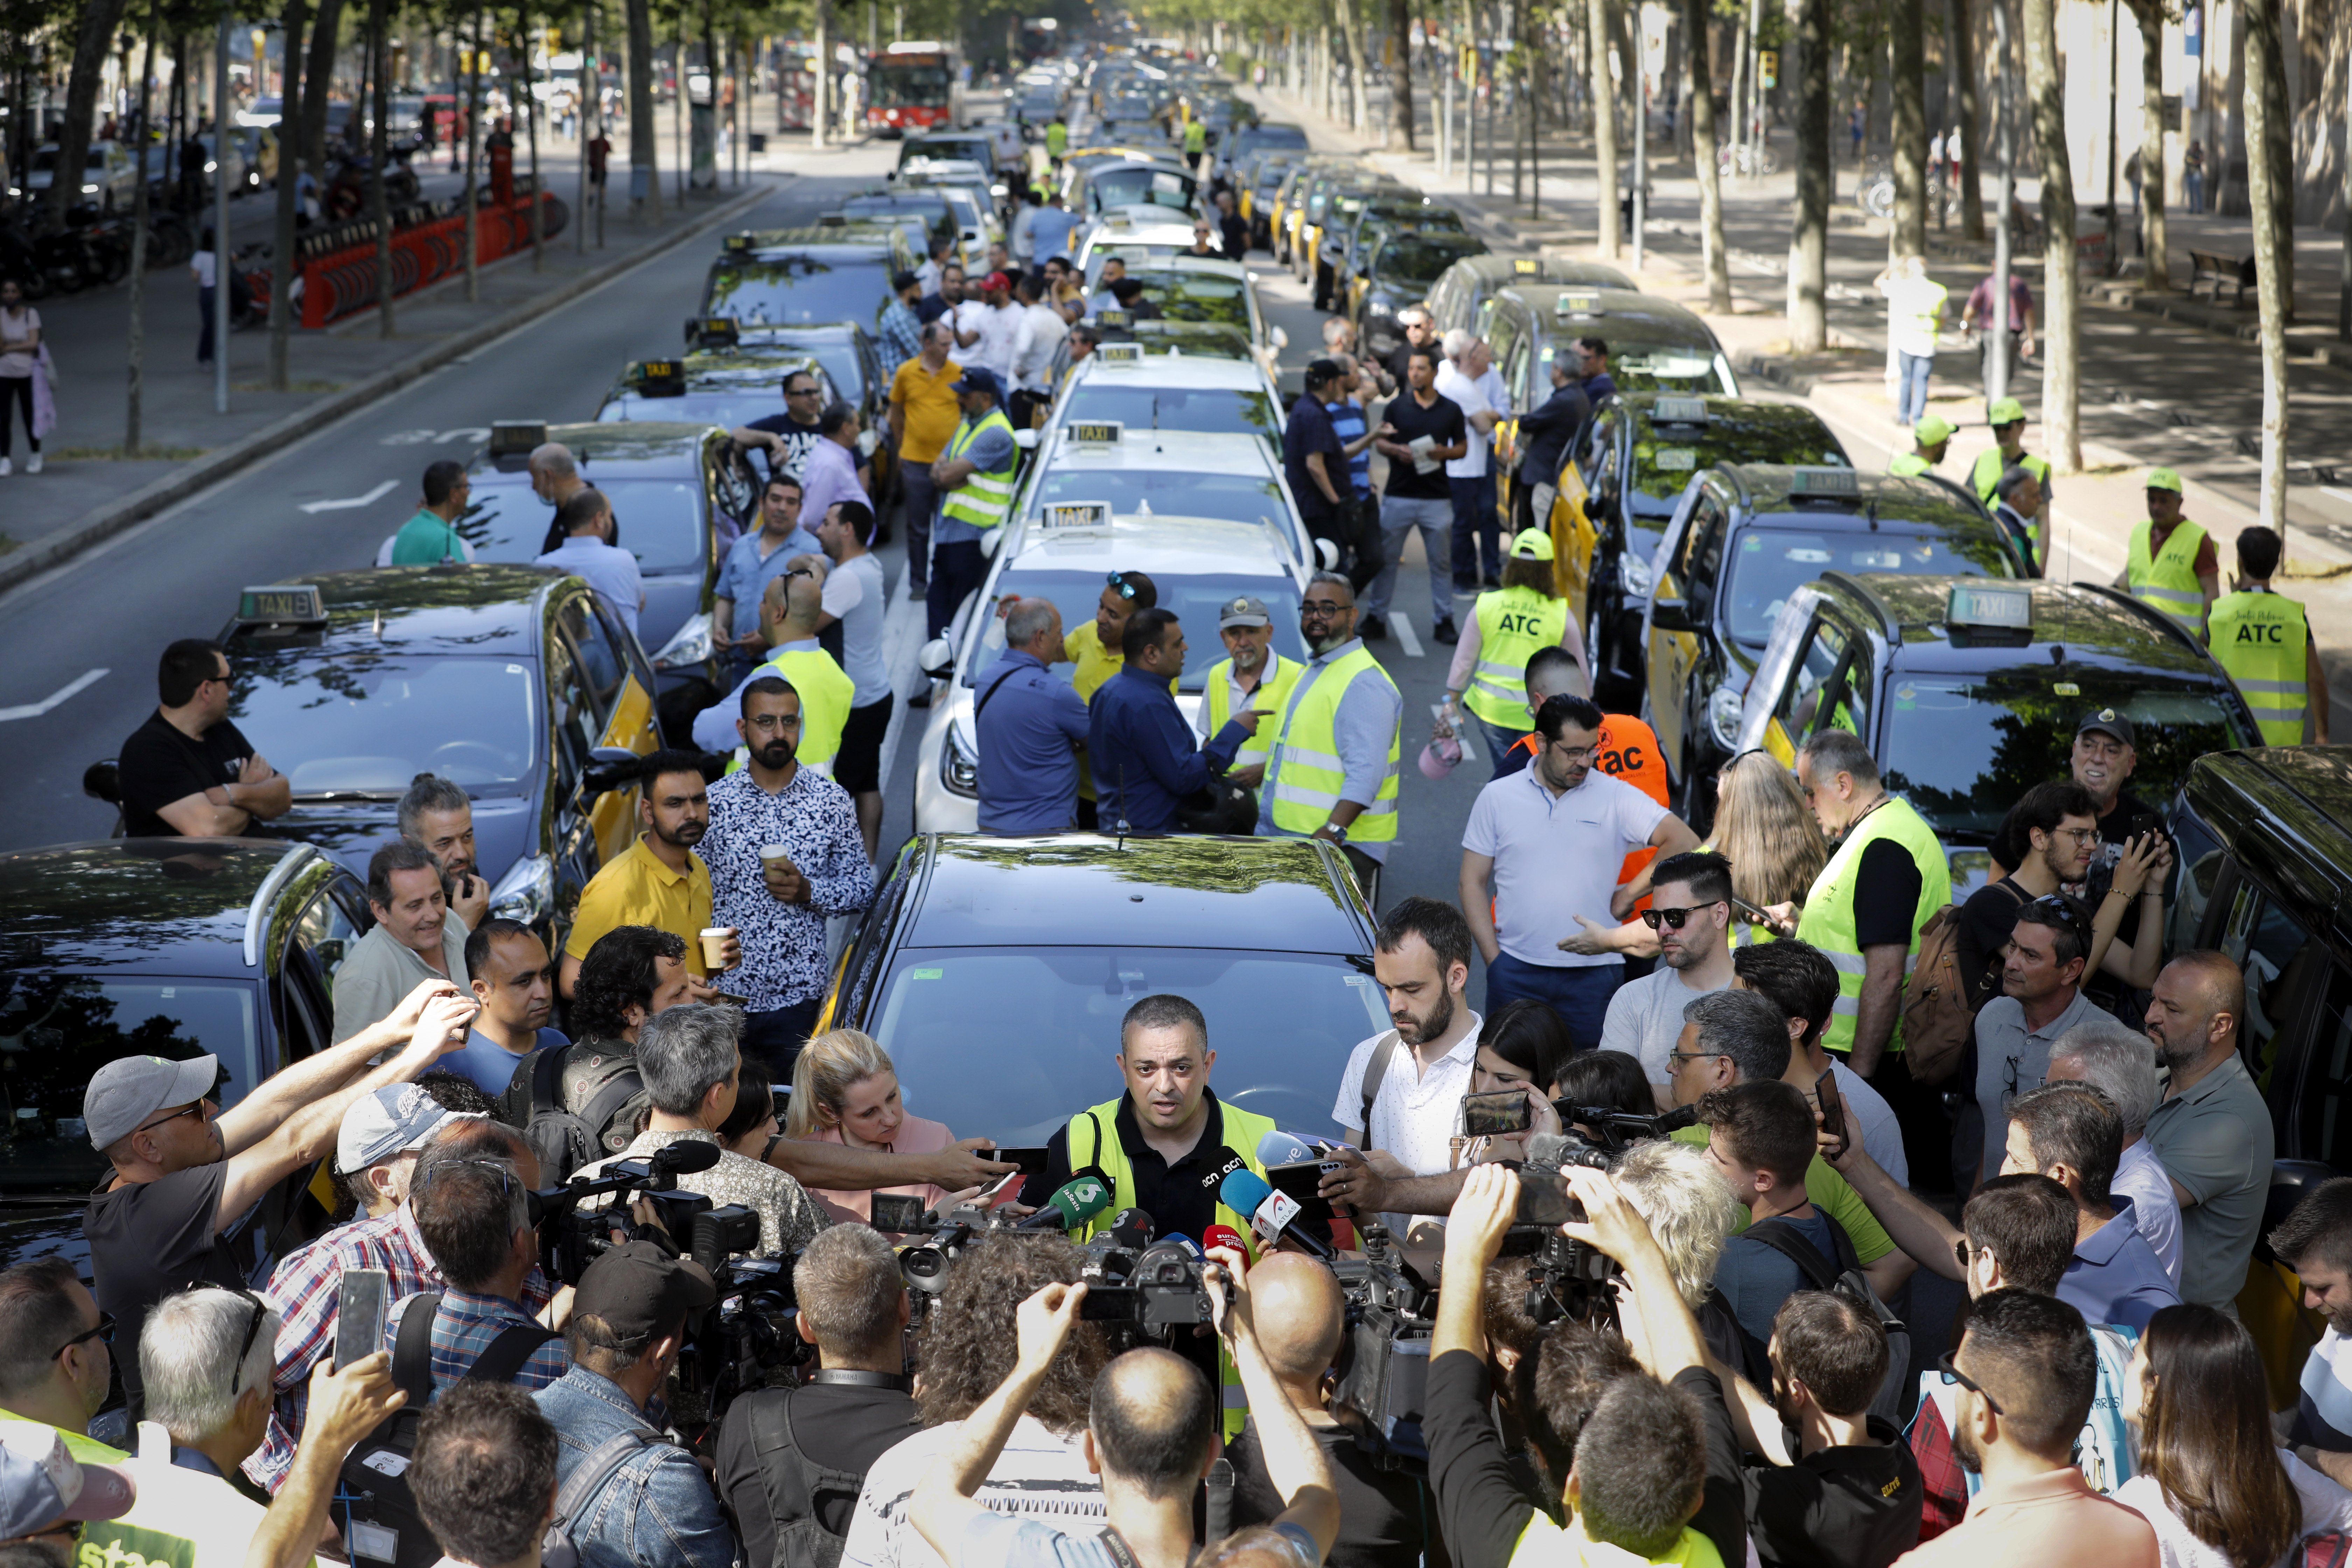 Centenares taxis concentración manifestación protesta Gran Via Barcelona proposición 1/30 VTC portavoz élite Tito Álvarez  - Foto: Andreu Dalmau / Efe